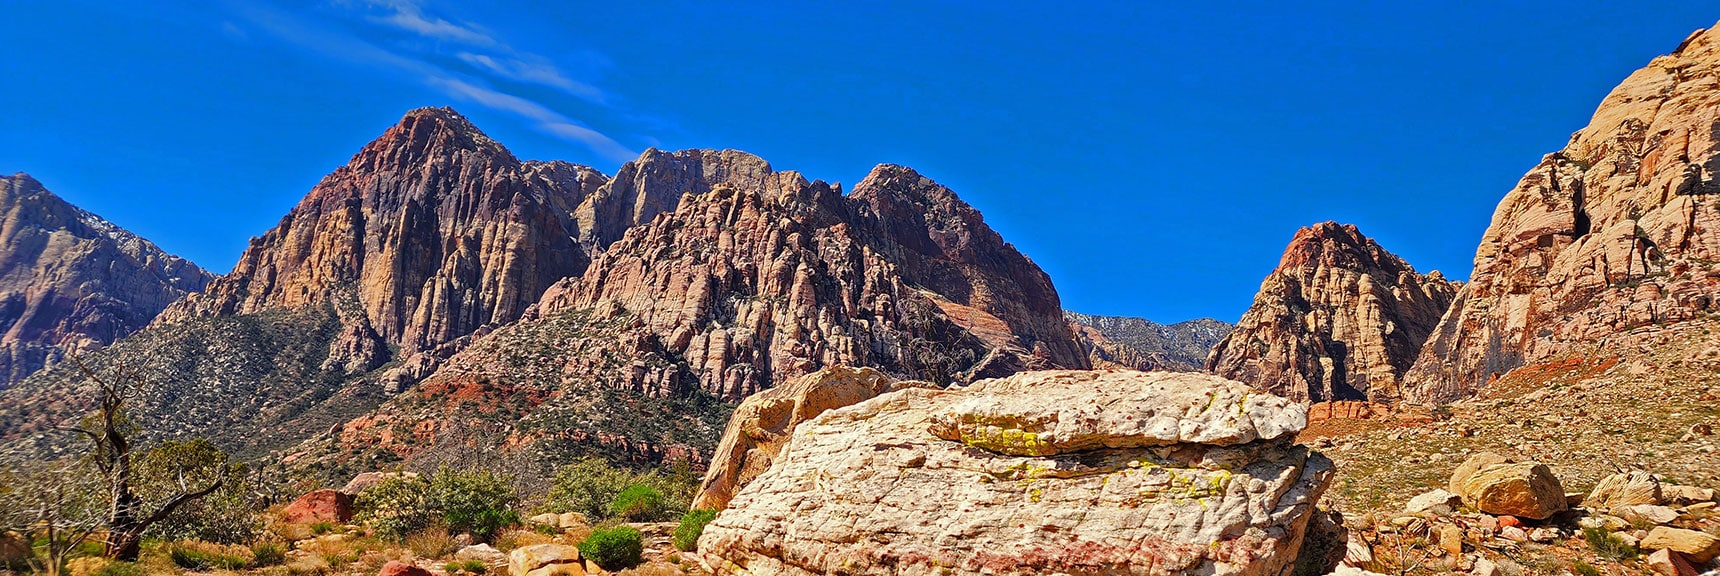 View Toward Pine Creek Canyon, Rainbow Mt., Juniper Peak | Dales Trail | Red Rock Canyon National Conservation Area, Nevada | David Smith | LasVegasAreaTrails.com